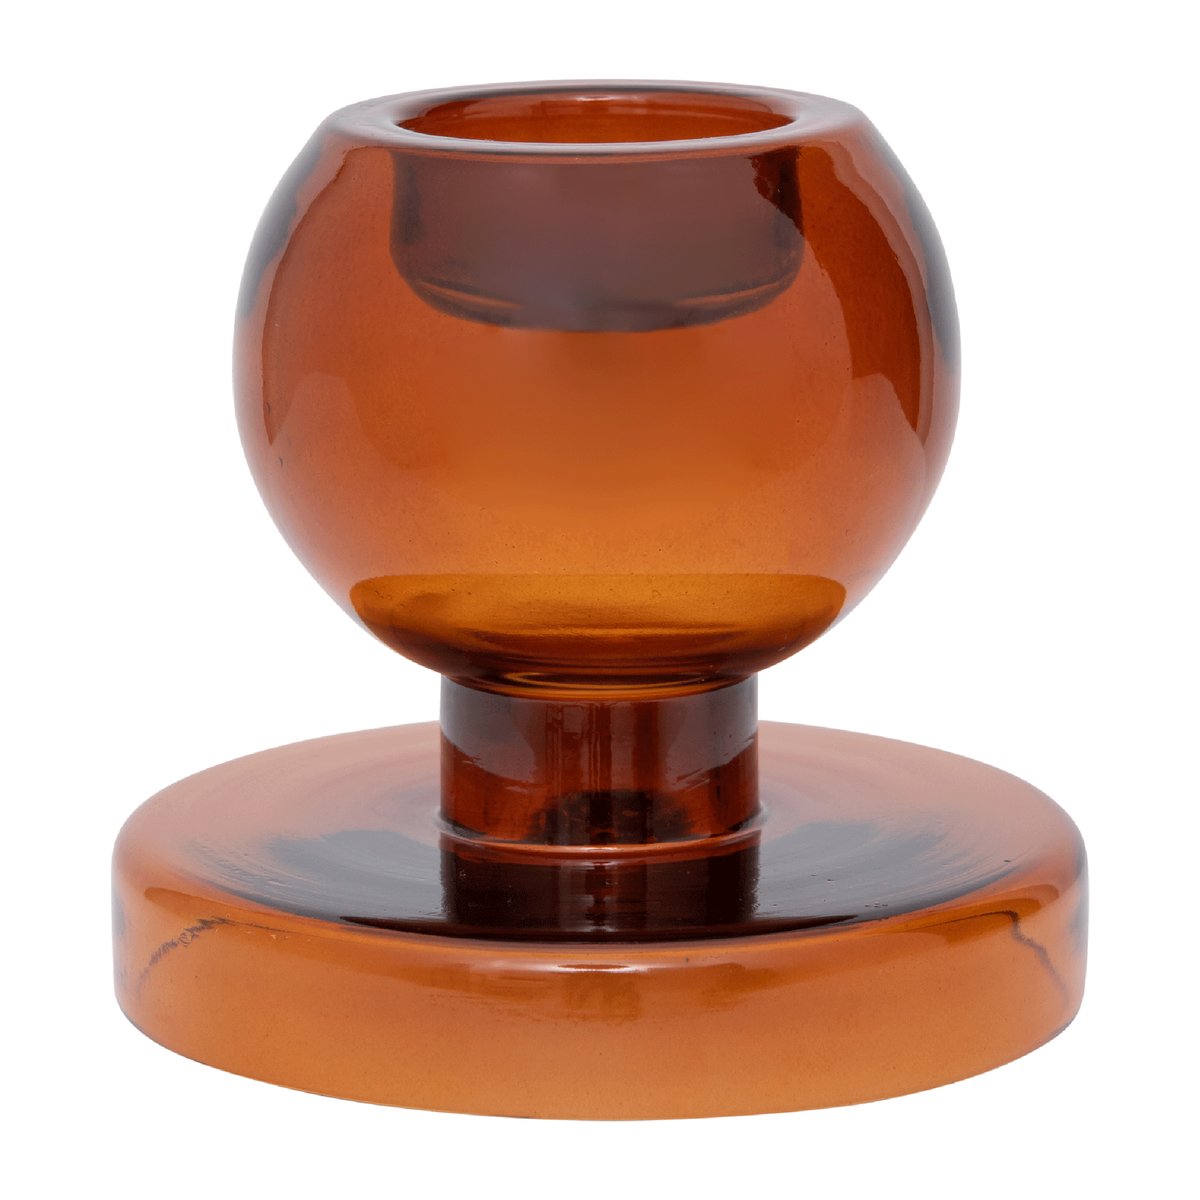 URBAN NATURE CULTURE Both Sides -kynttilälyhty/kynttilänjalka Ø 11 cm Apricot orange